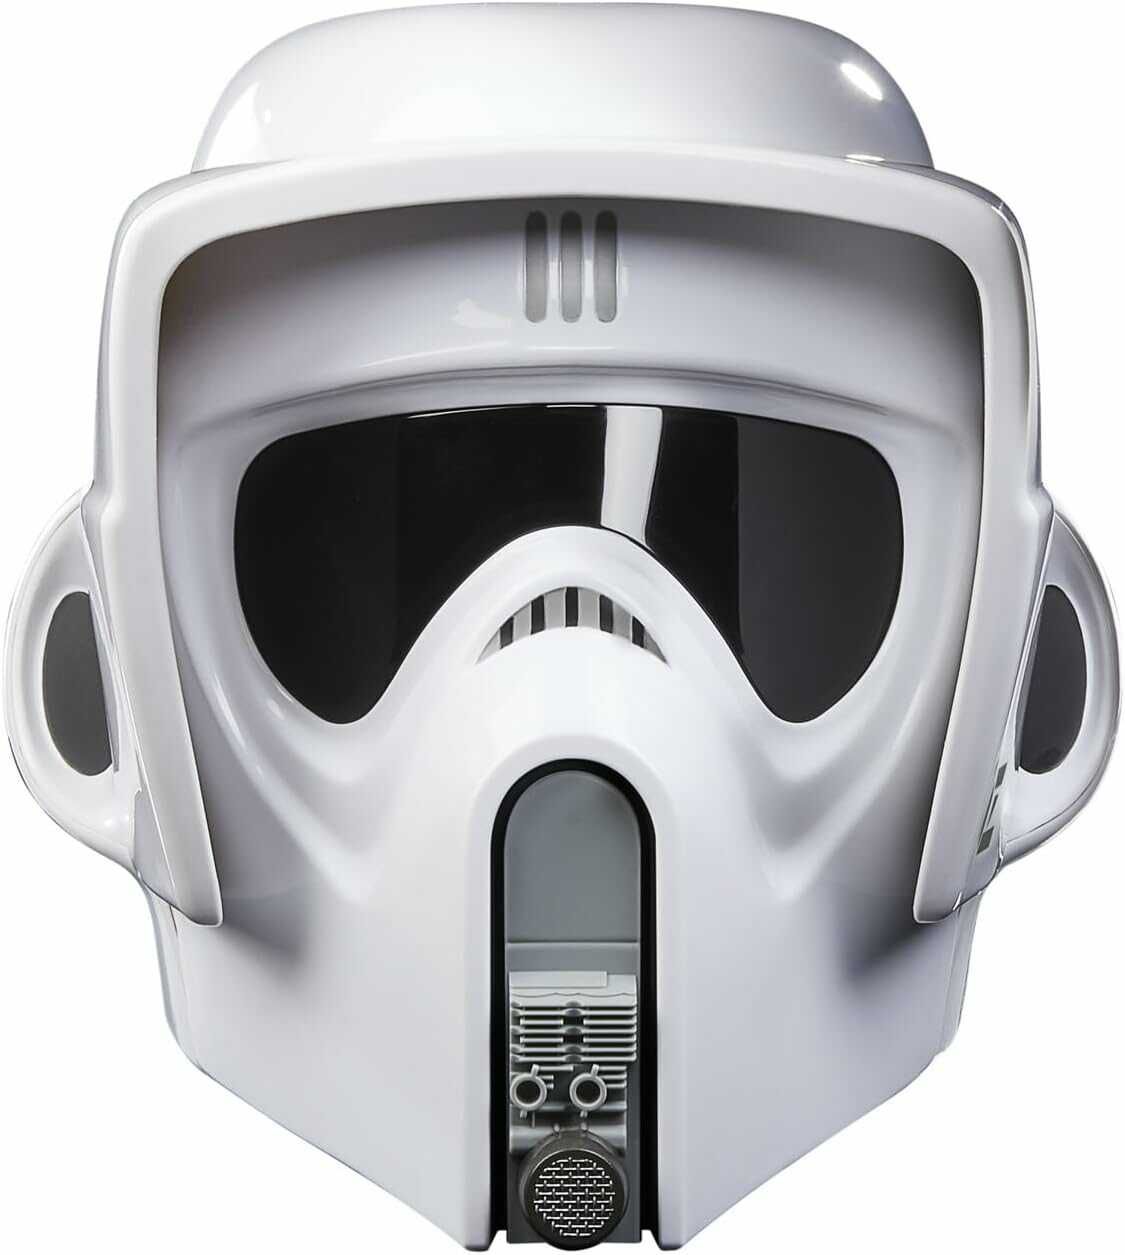 Hasbro Star Wars Black Series Scout Trooper für 124,99€ statt 155,54€